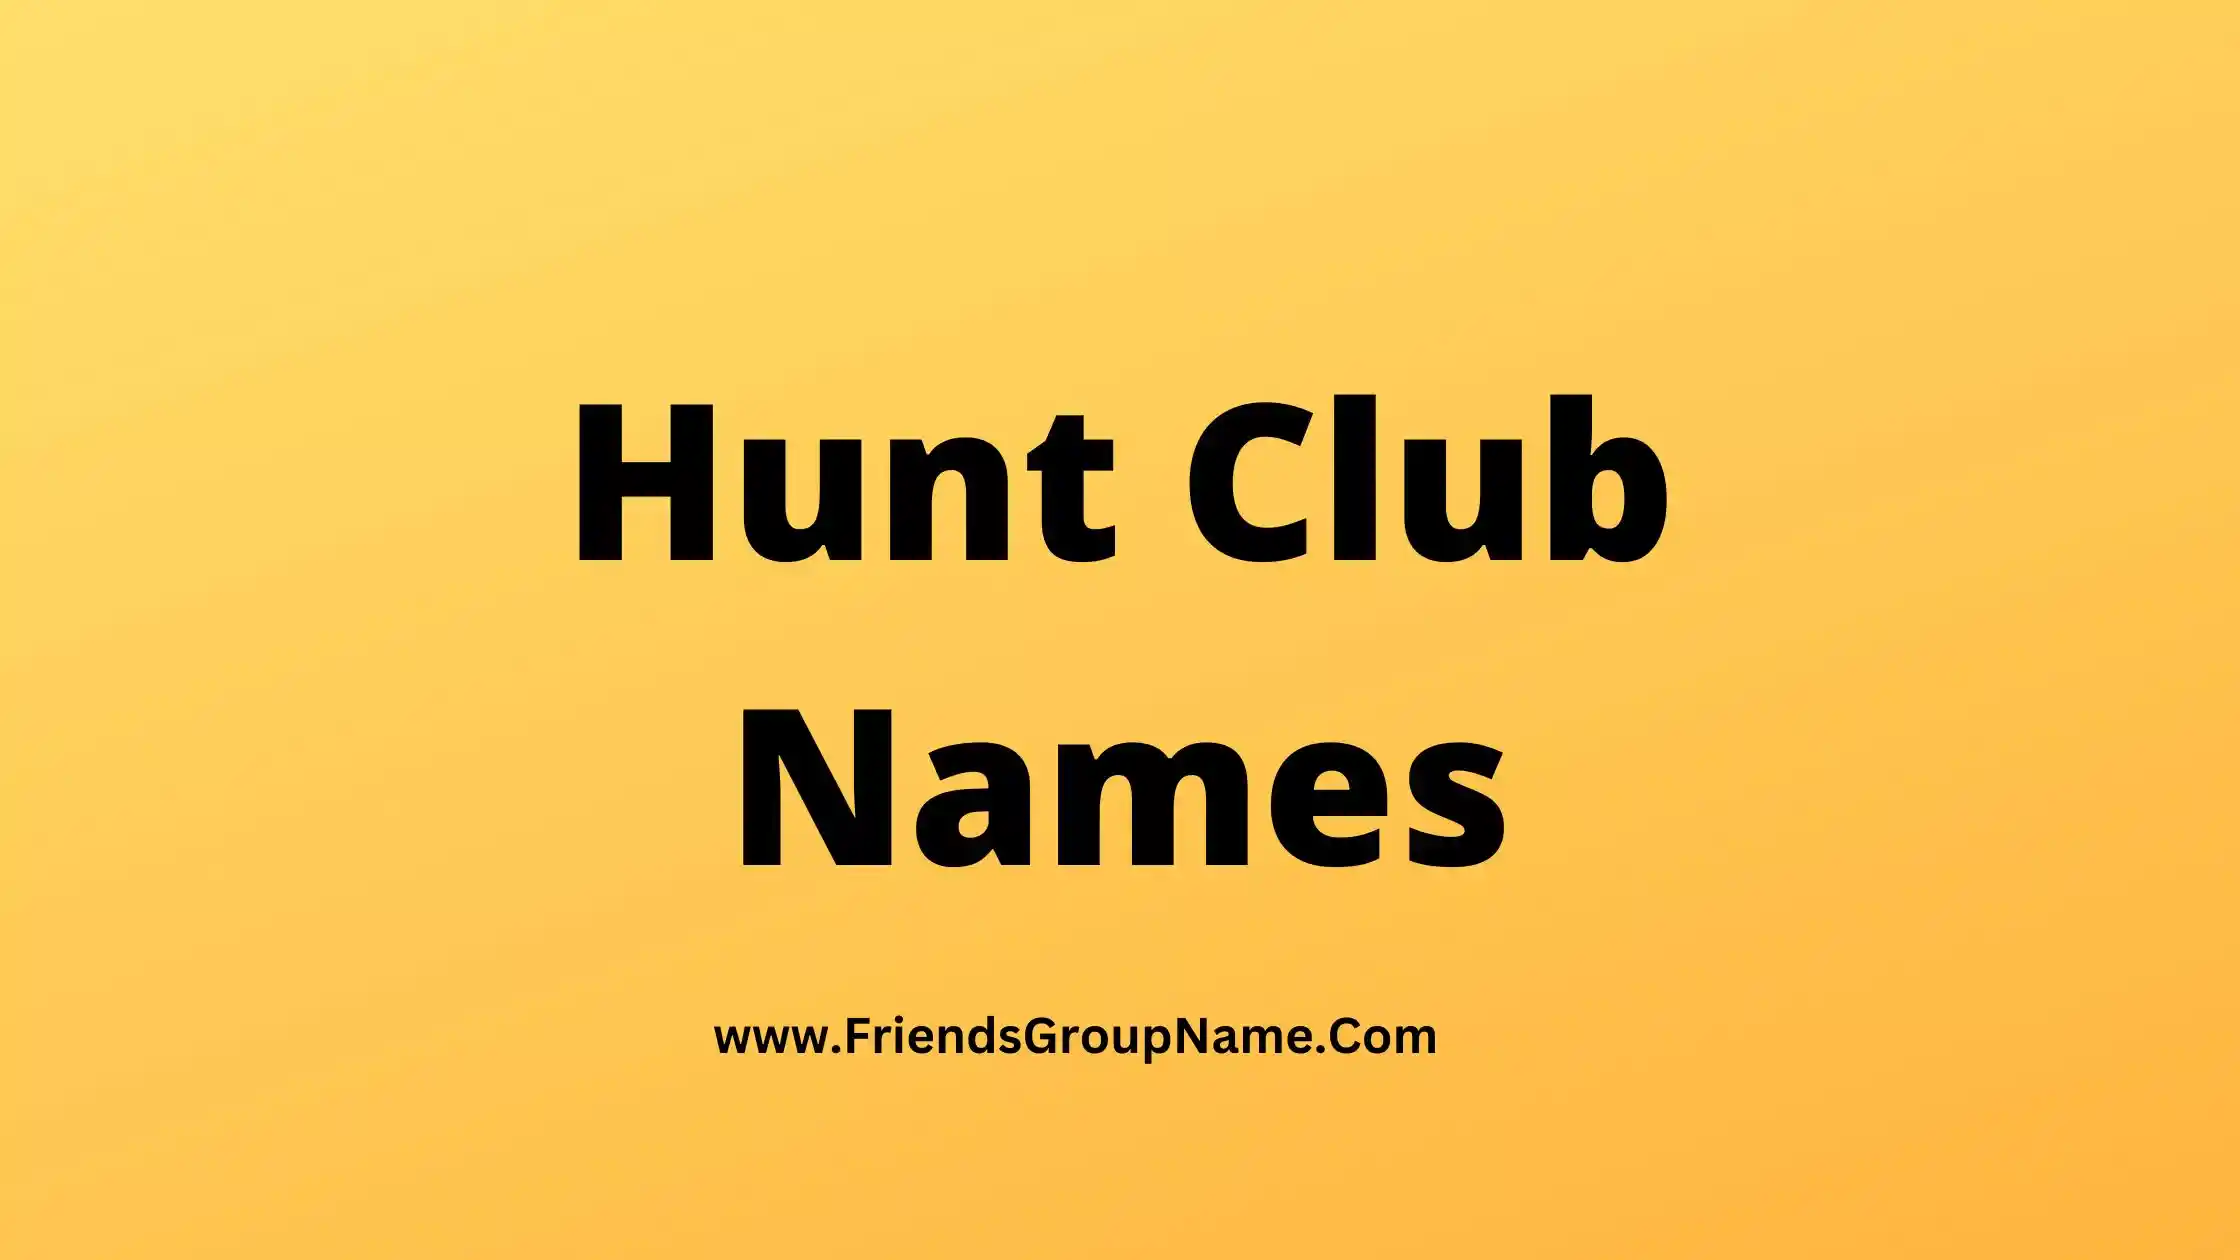 Hunt Club Names